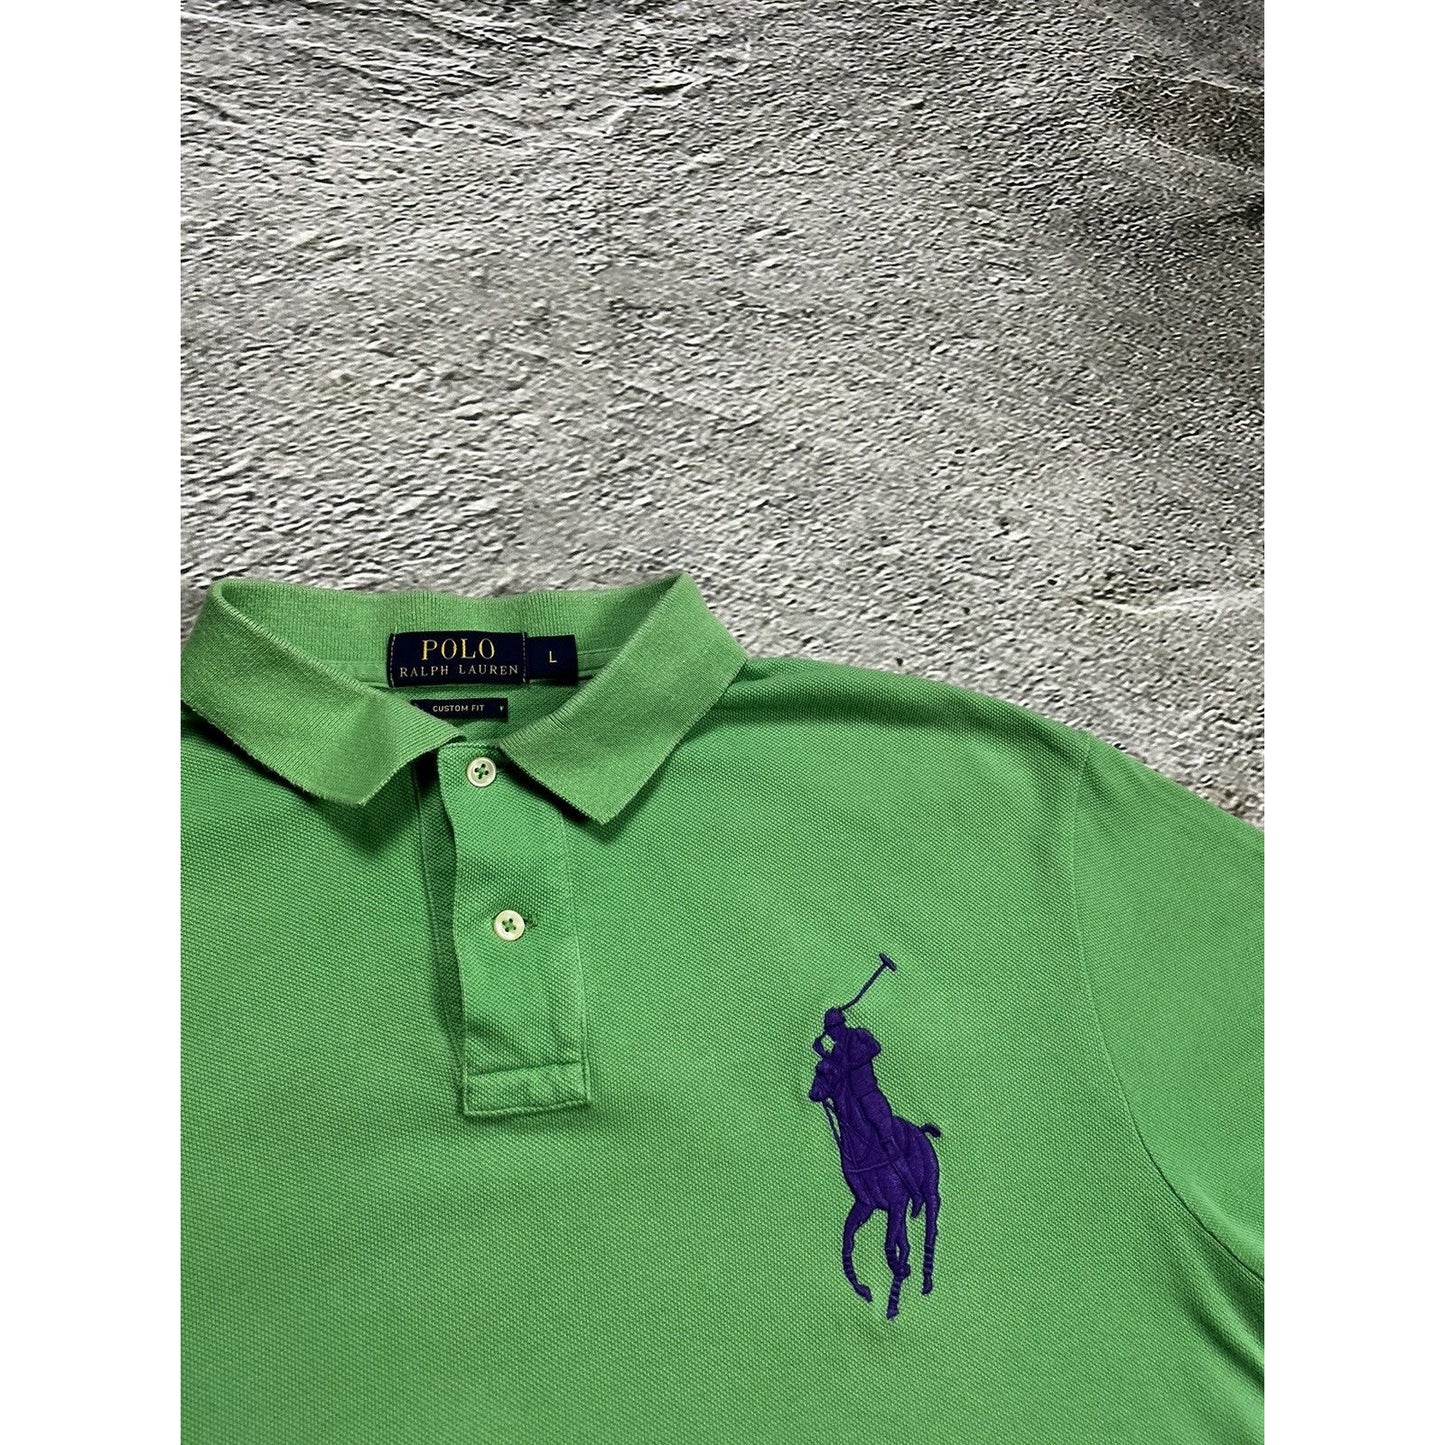 Chief Keef Polo Ralph Lauren T-shirt big pony green purple